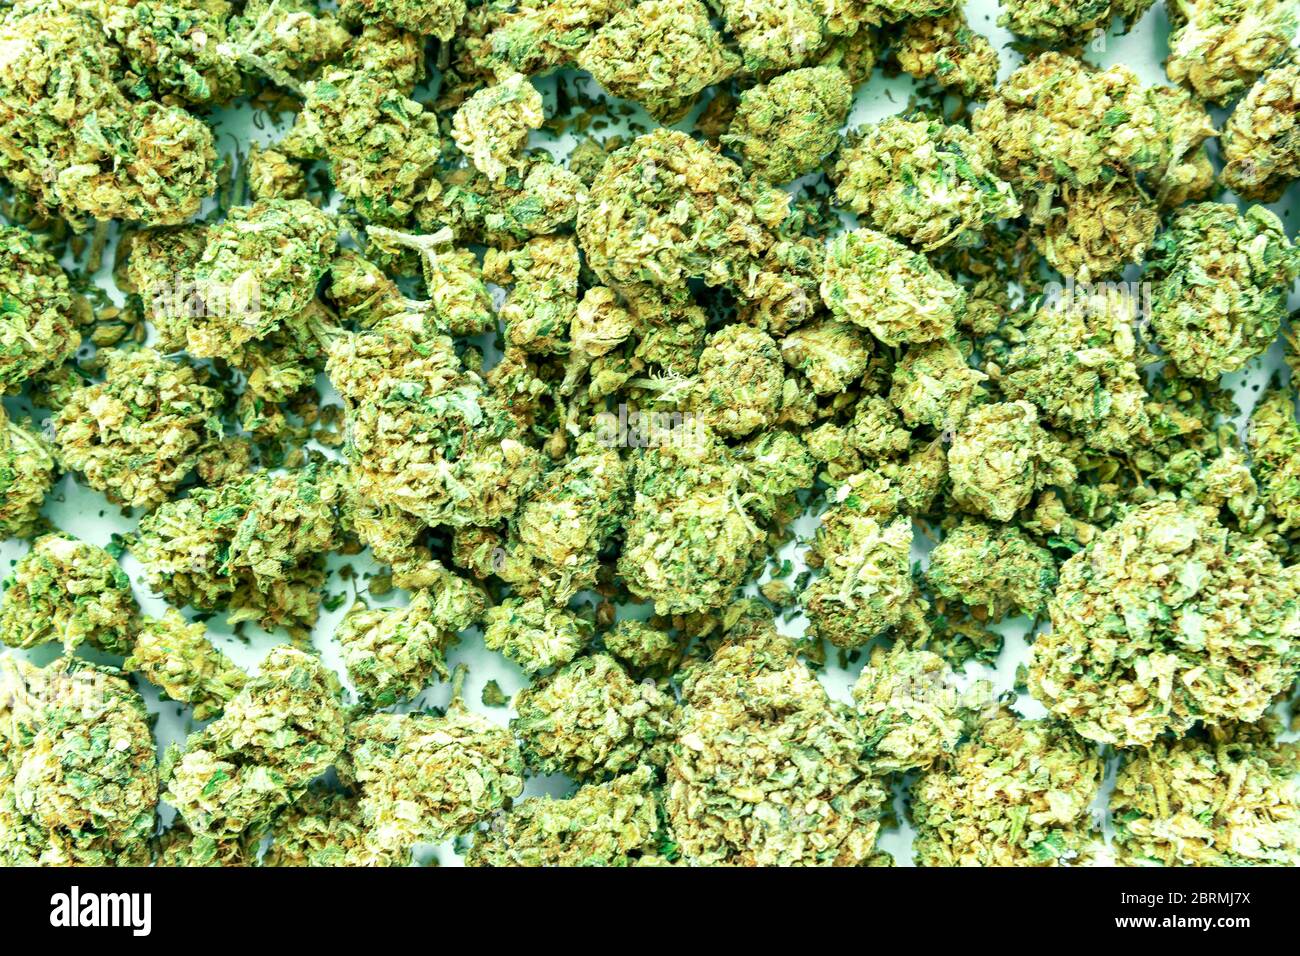 Contexte des bourgeons de cannabis, de la marijuana. Vue de dessus. Banque D'Images